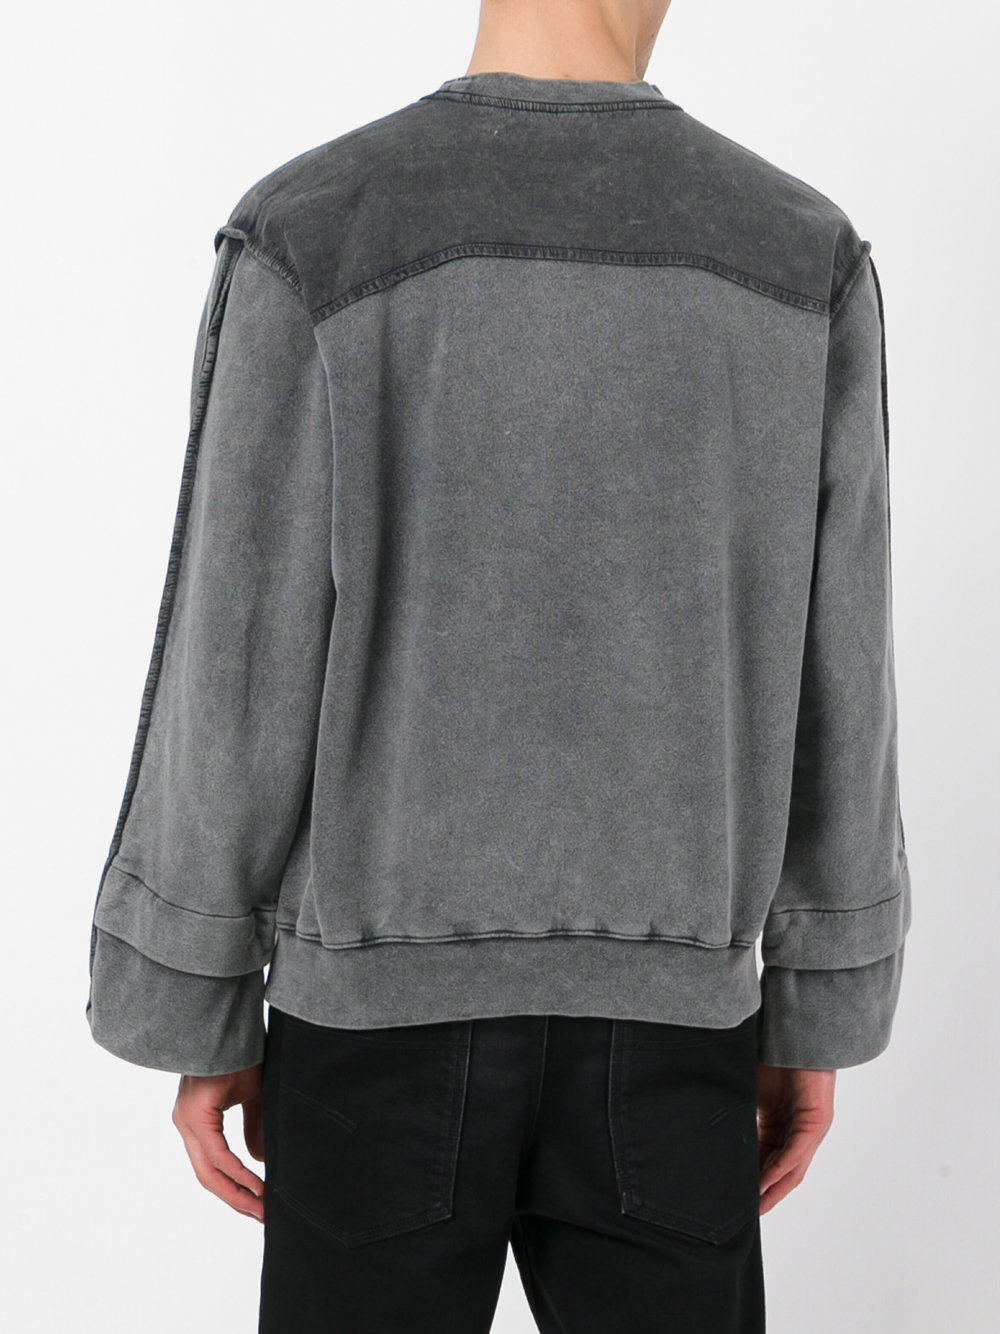 Ktz Inside Out Sweatshirt, $254, farfetch.com